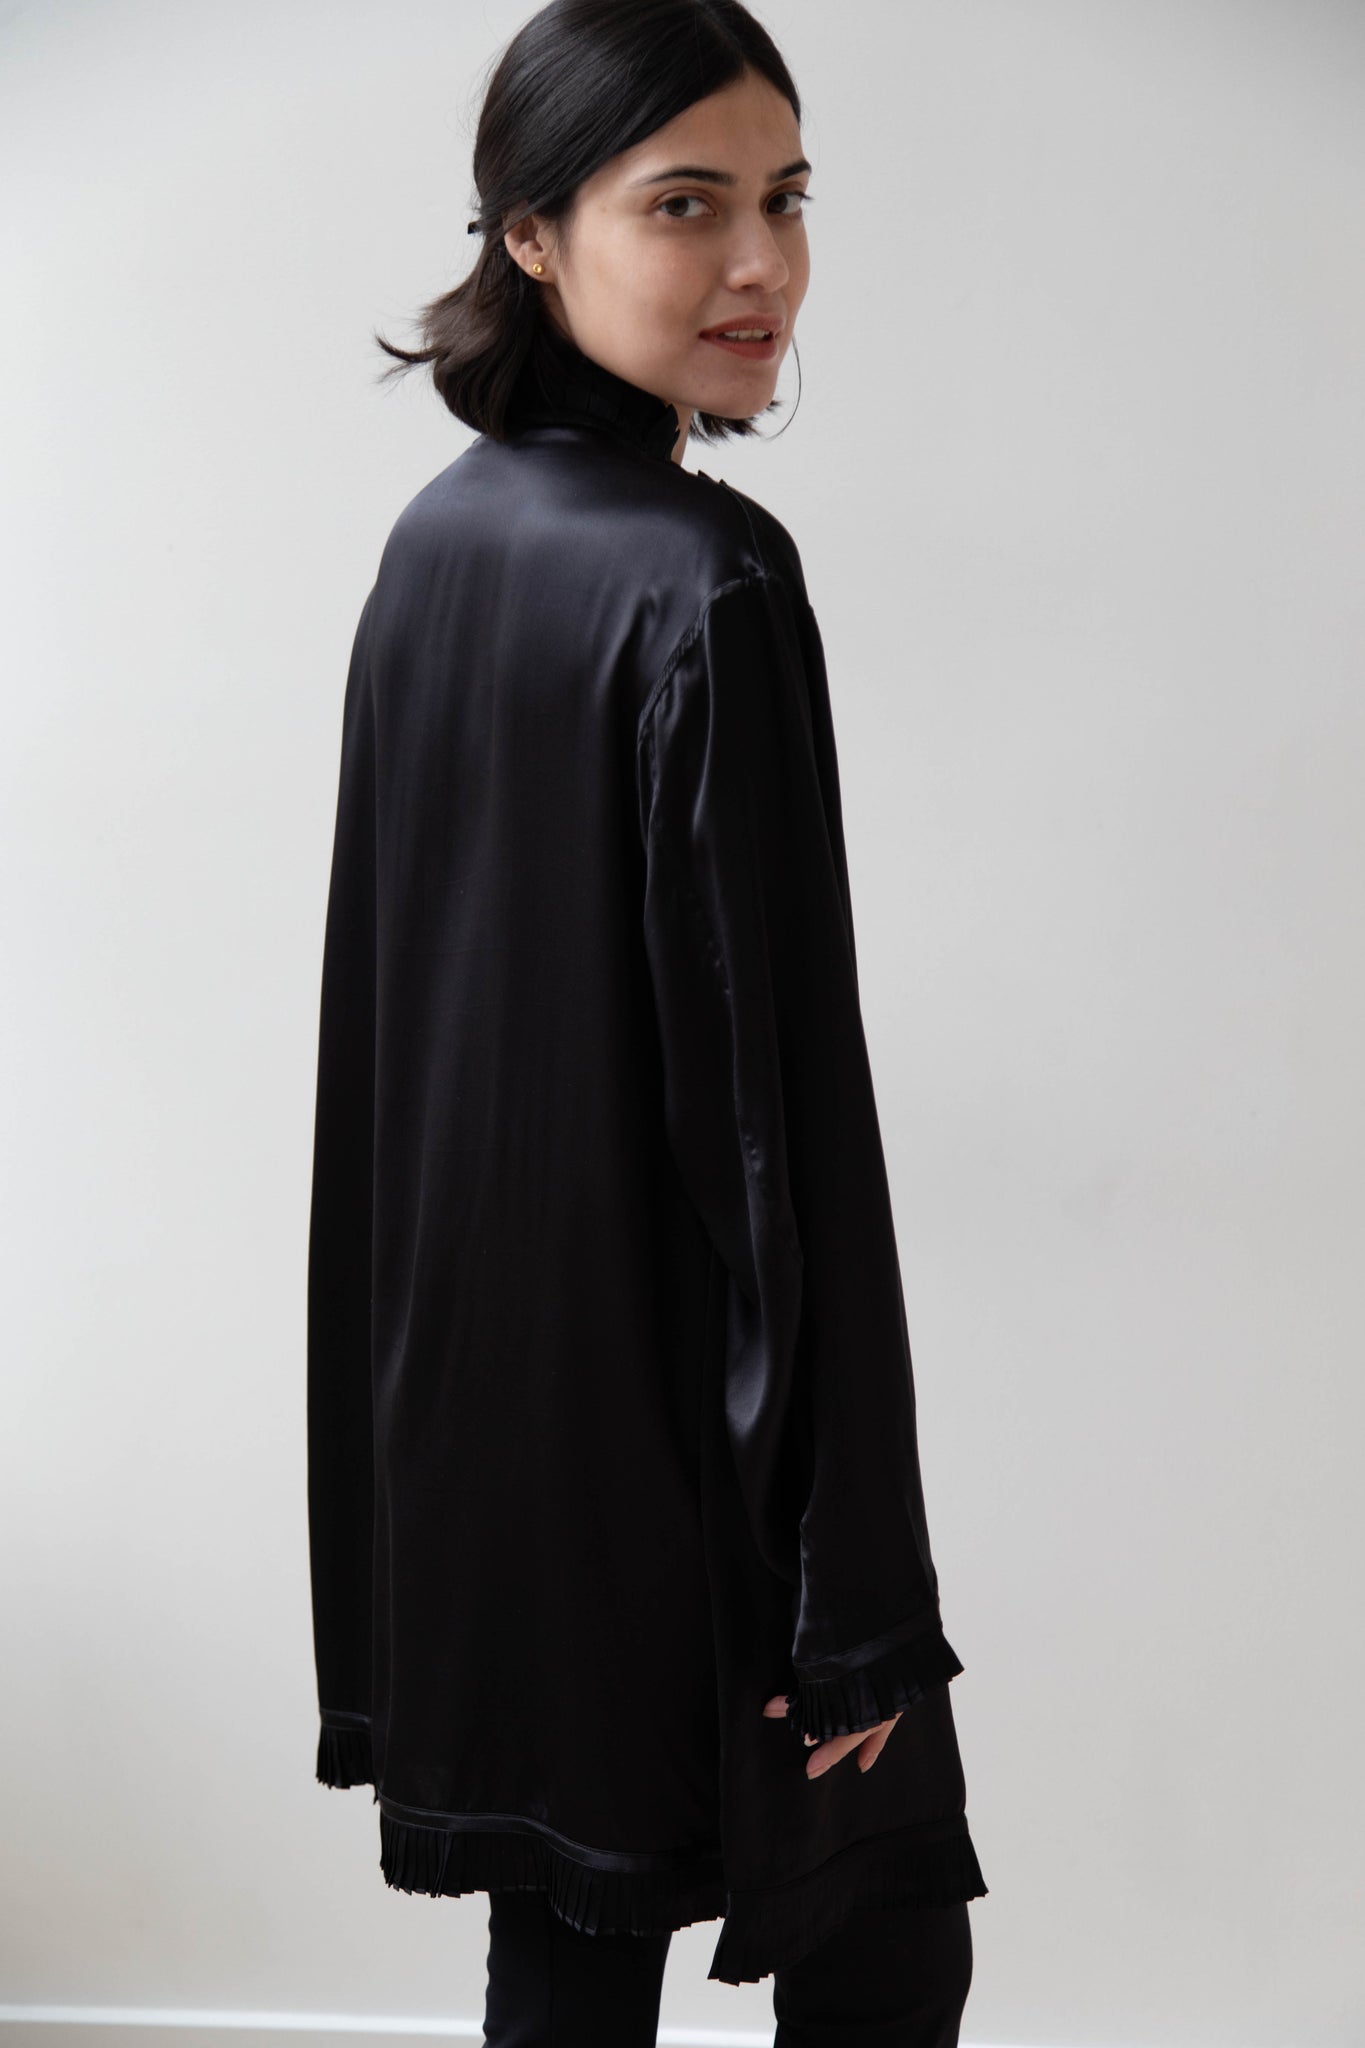 Anaak | Pavel Satin Silk Tuxedo Dress in Onyx